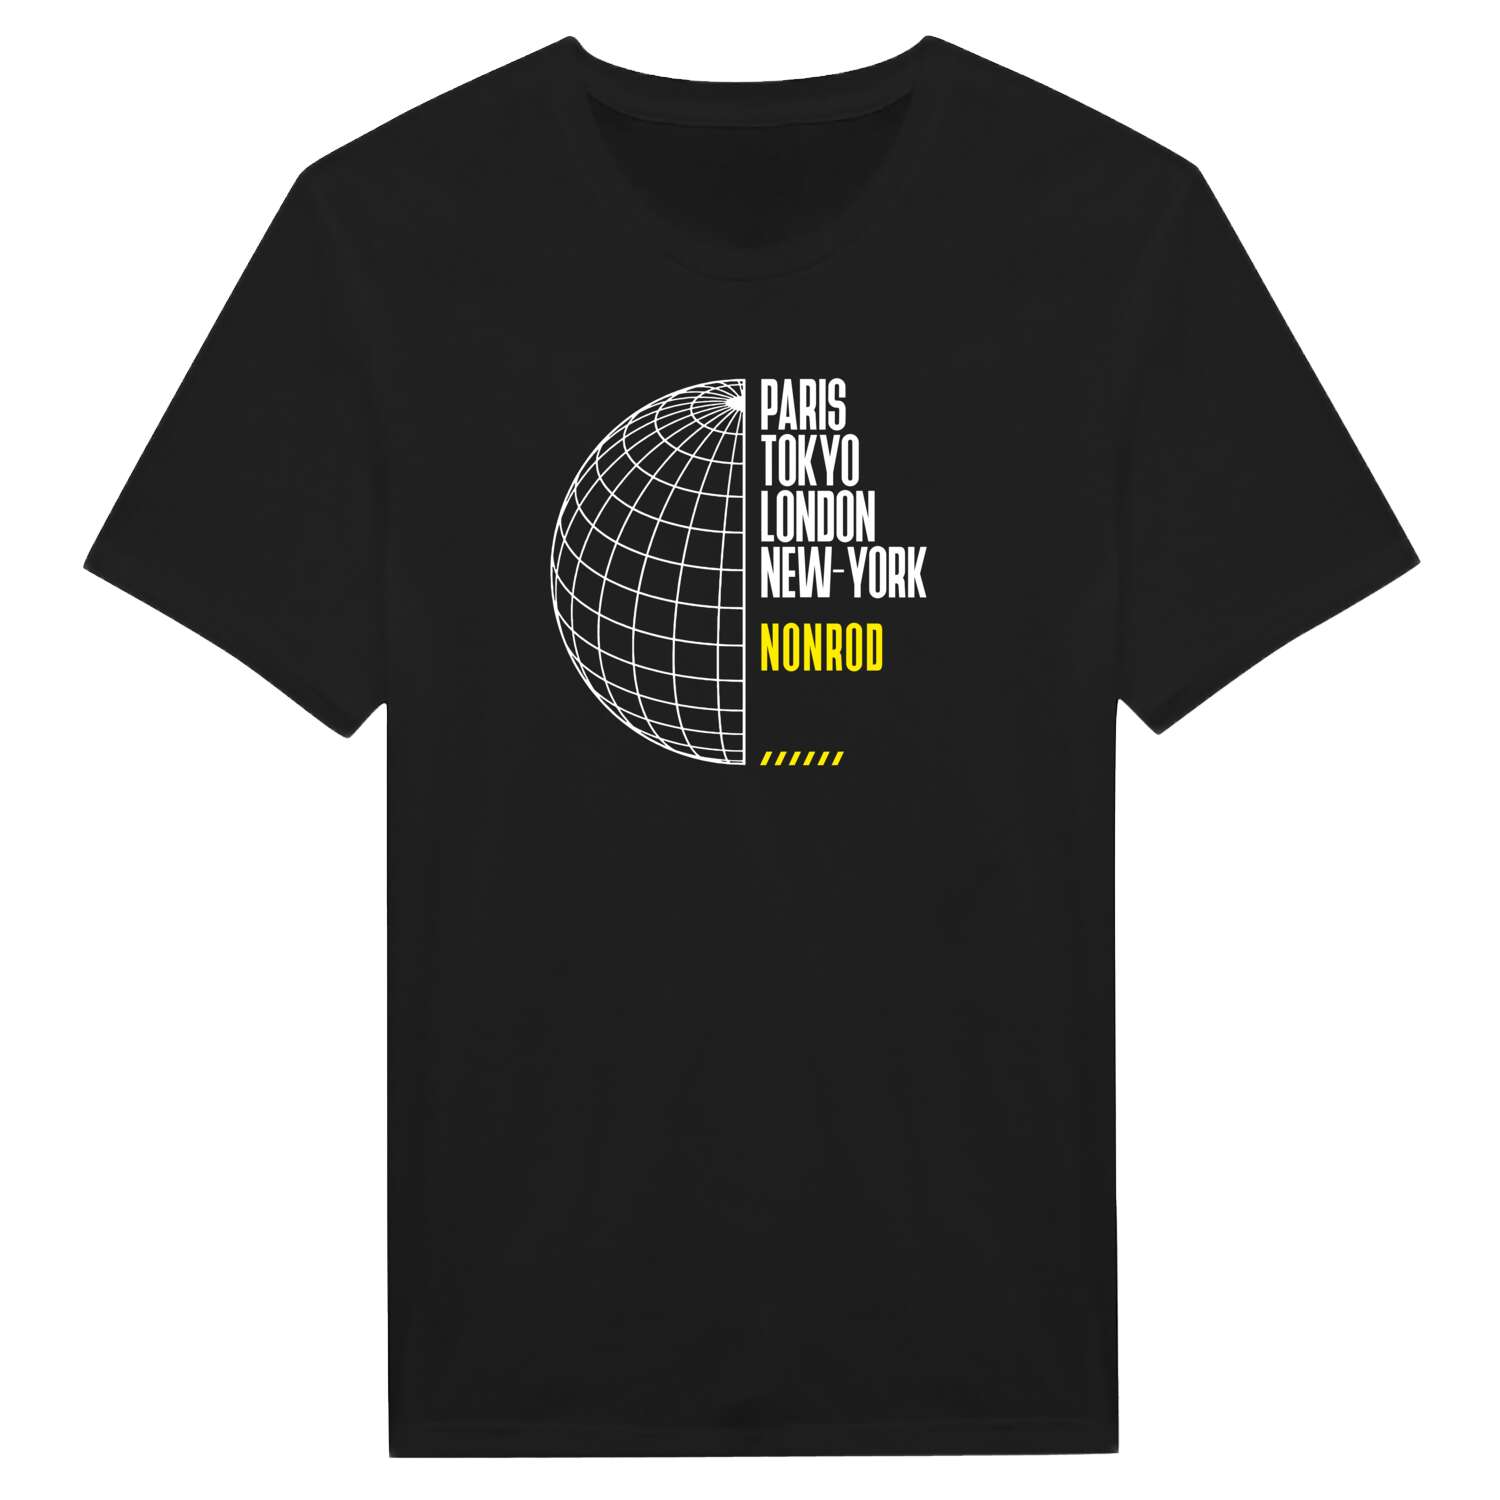 Nonrod T-Shirt »Paris Tokyo London«